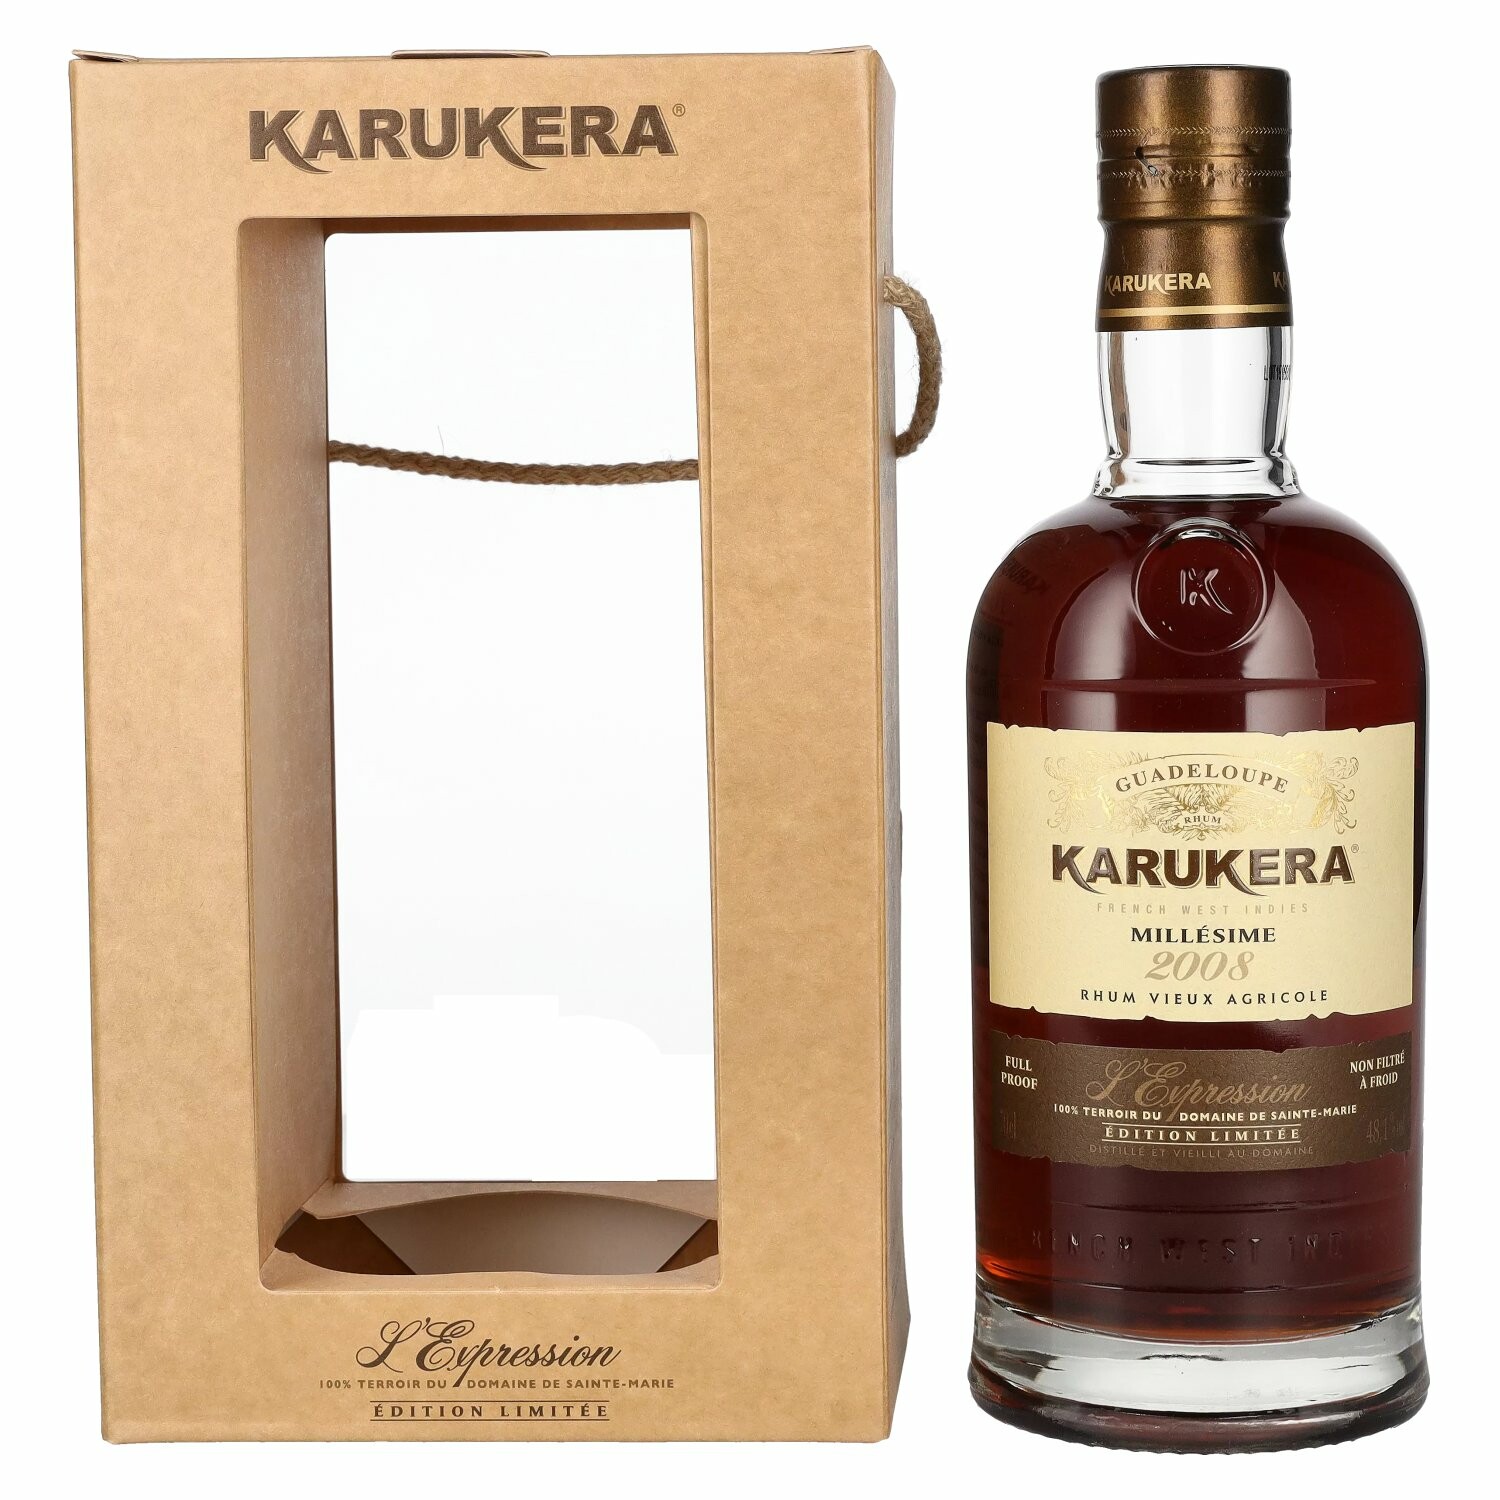 Karukera L'Expression MILLÉSIME Rhum Vieux Agricole 2008 48,1% Vol. 0,7l in Giftbox